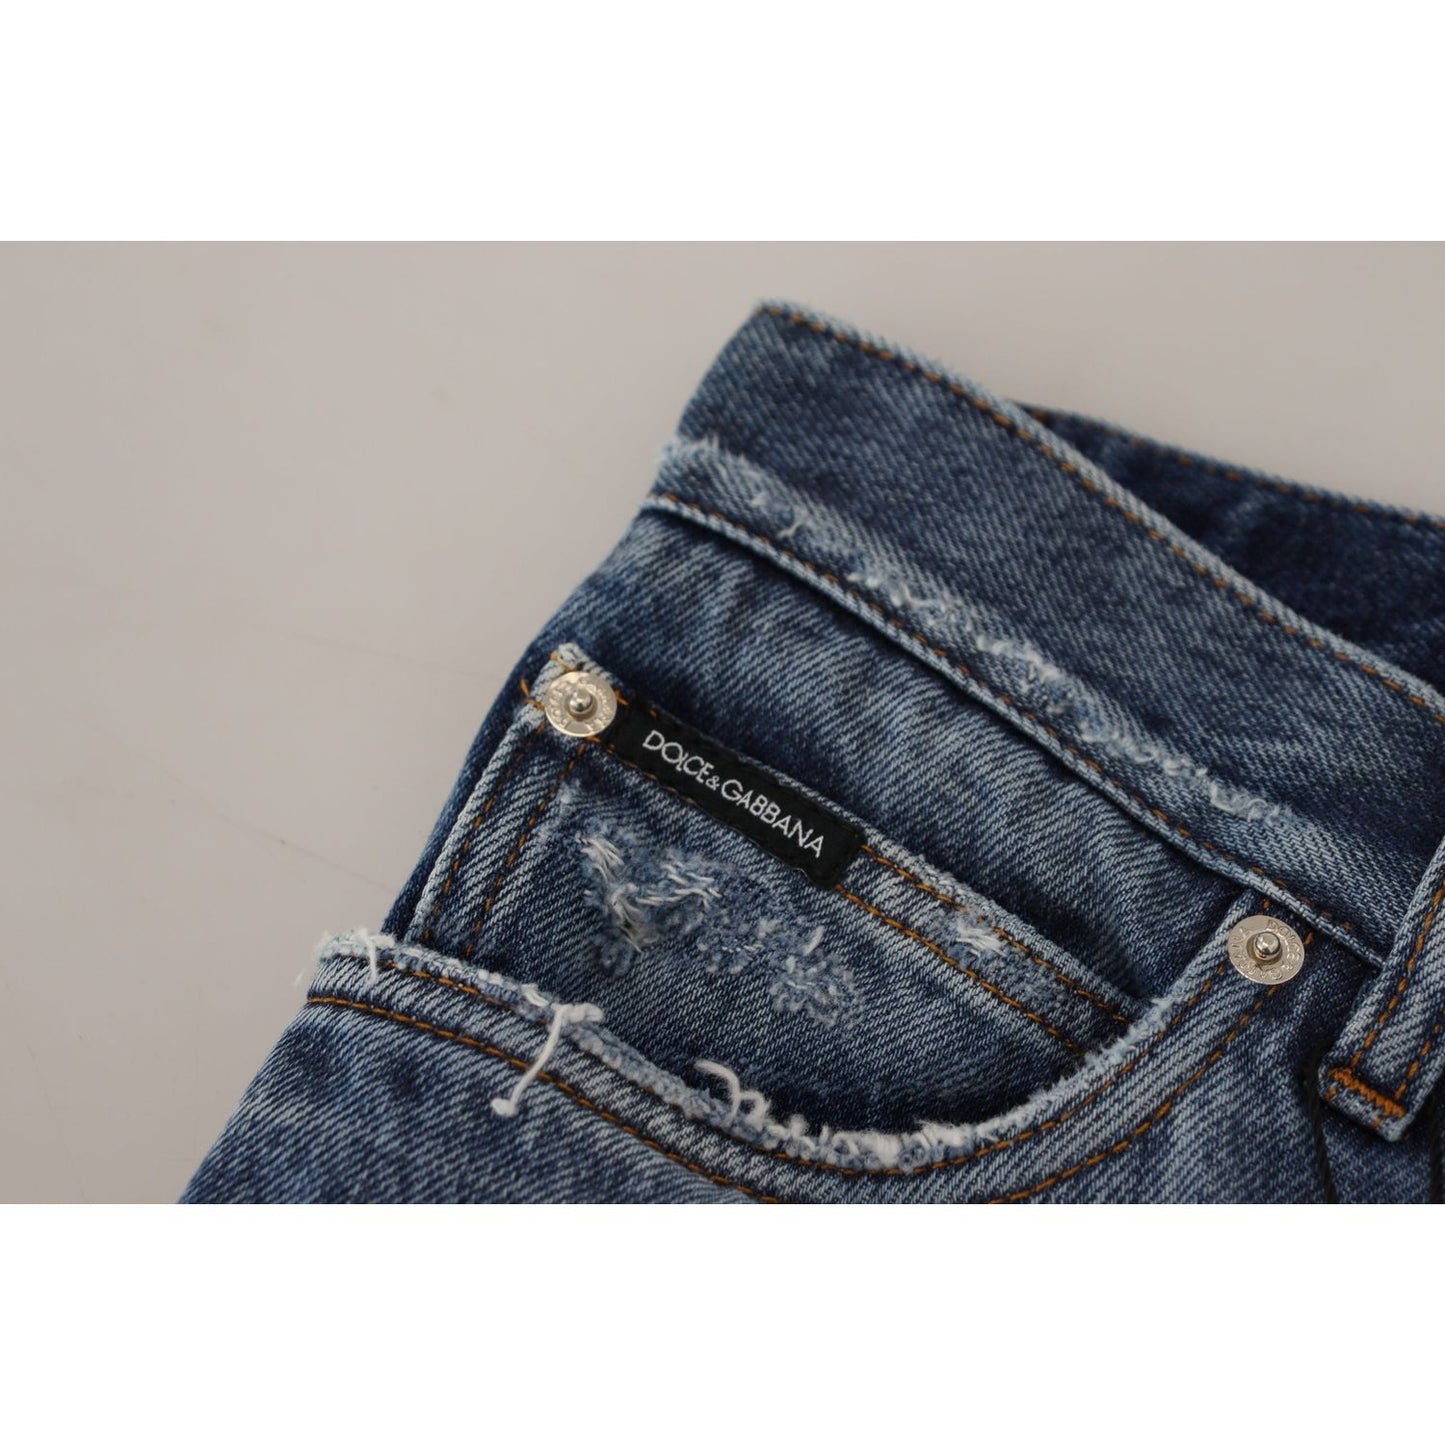 Dolce & Gabbana Chic Tattered Denim Pants for the Modern Man blue-cotton-tattered-men-denim-jeans